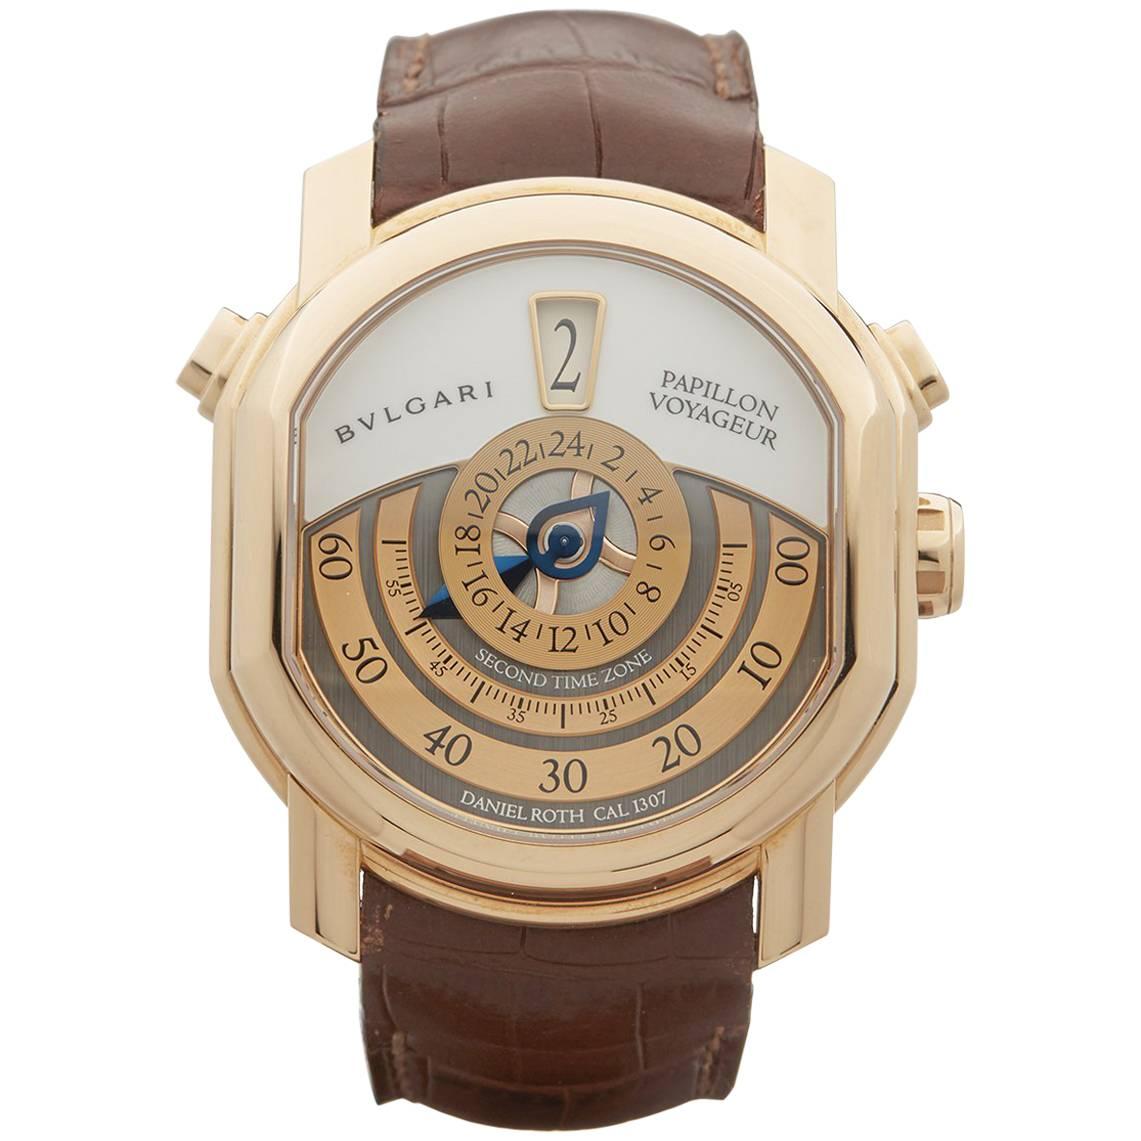 Bulgari Rose Gold Papillon Voyager Ltd Ed Daniel Roth Automatic Wristwatch